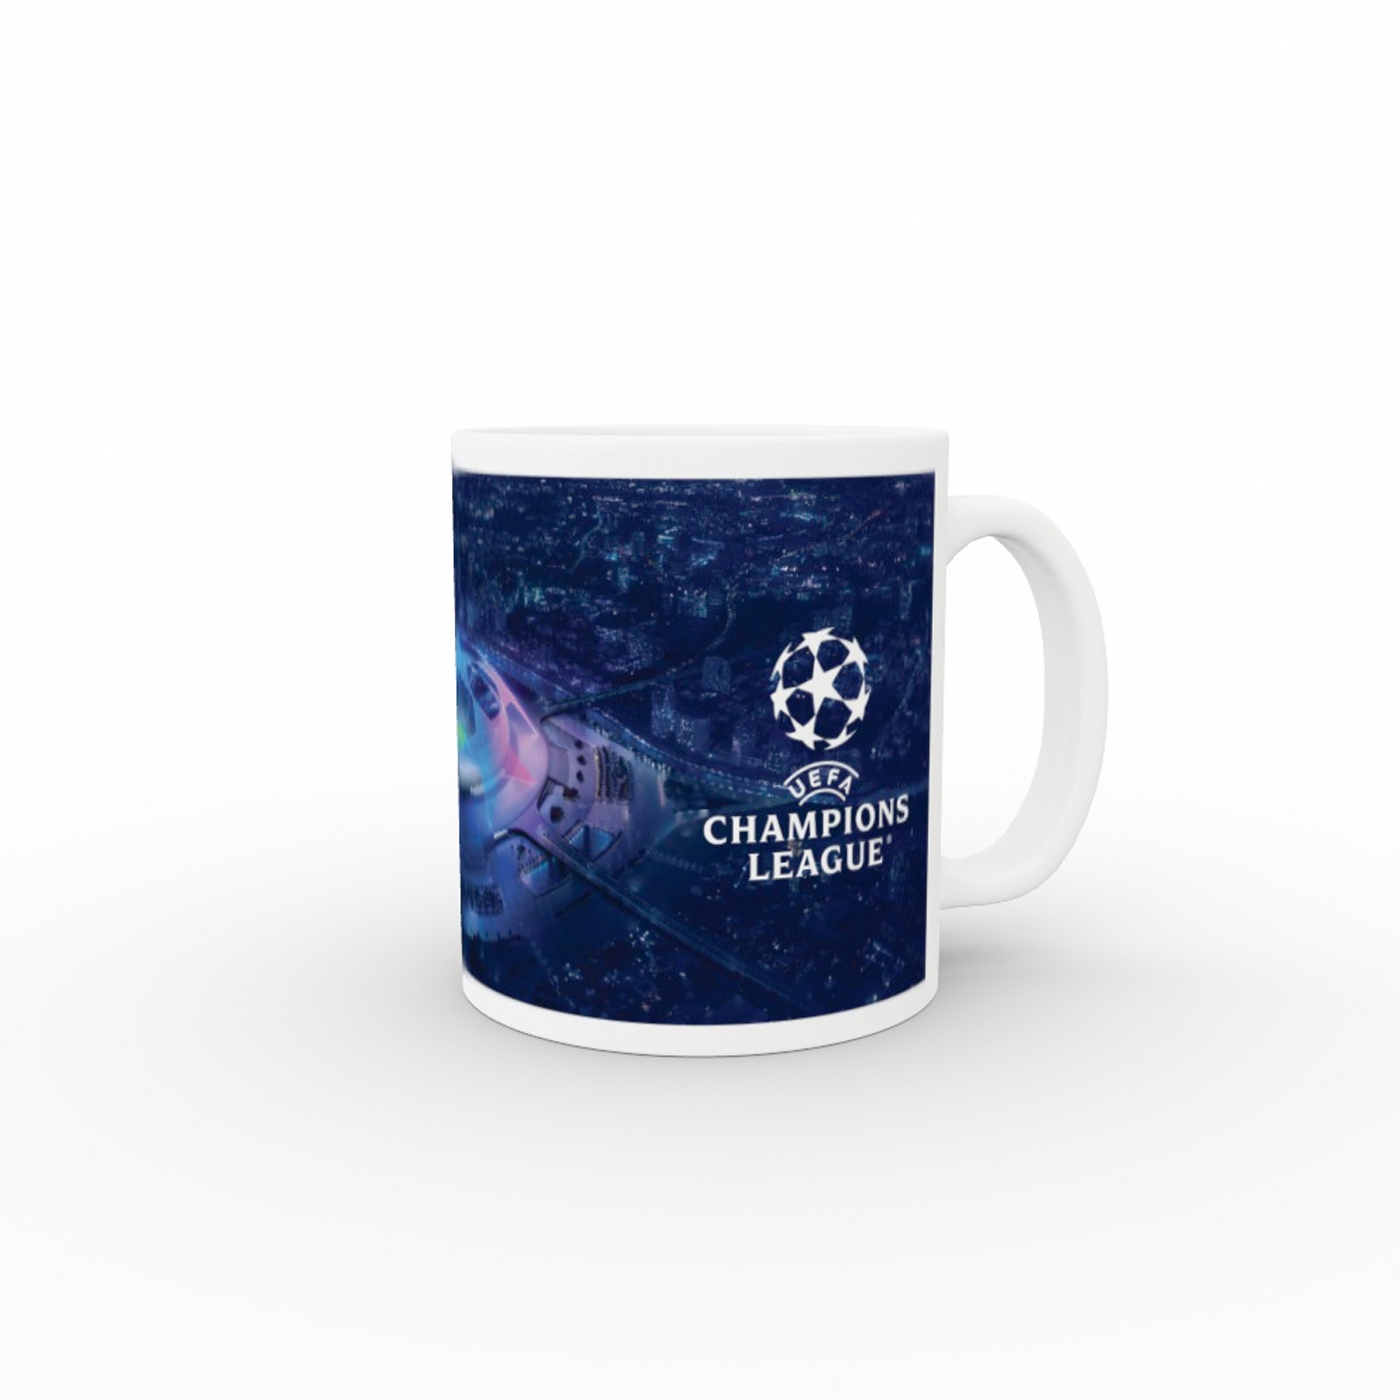 Champions League Stadium Mug